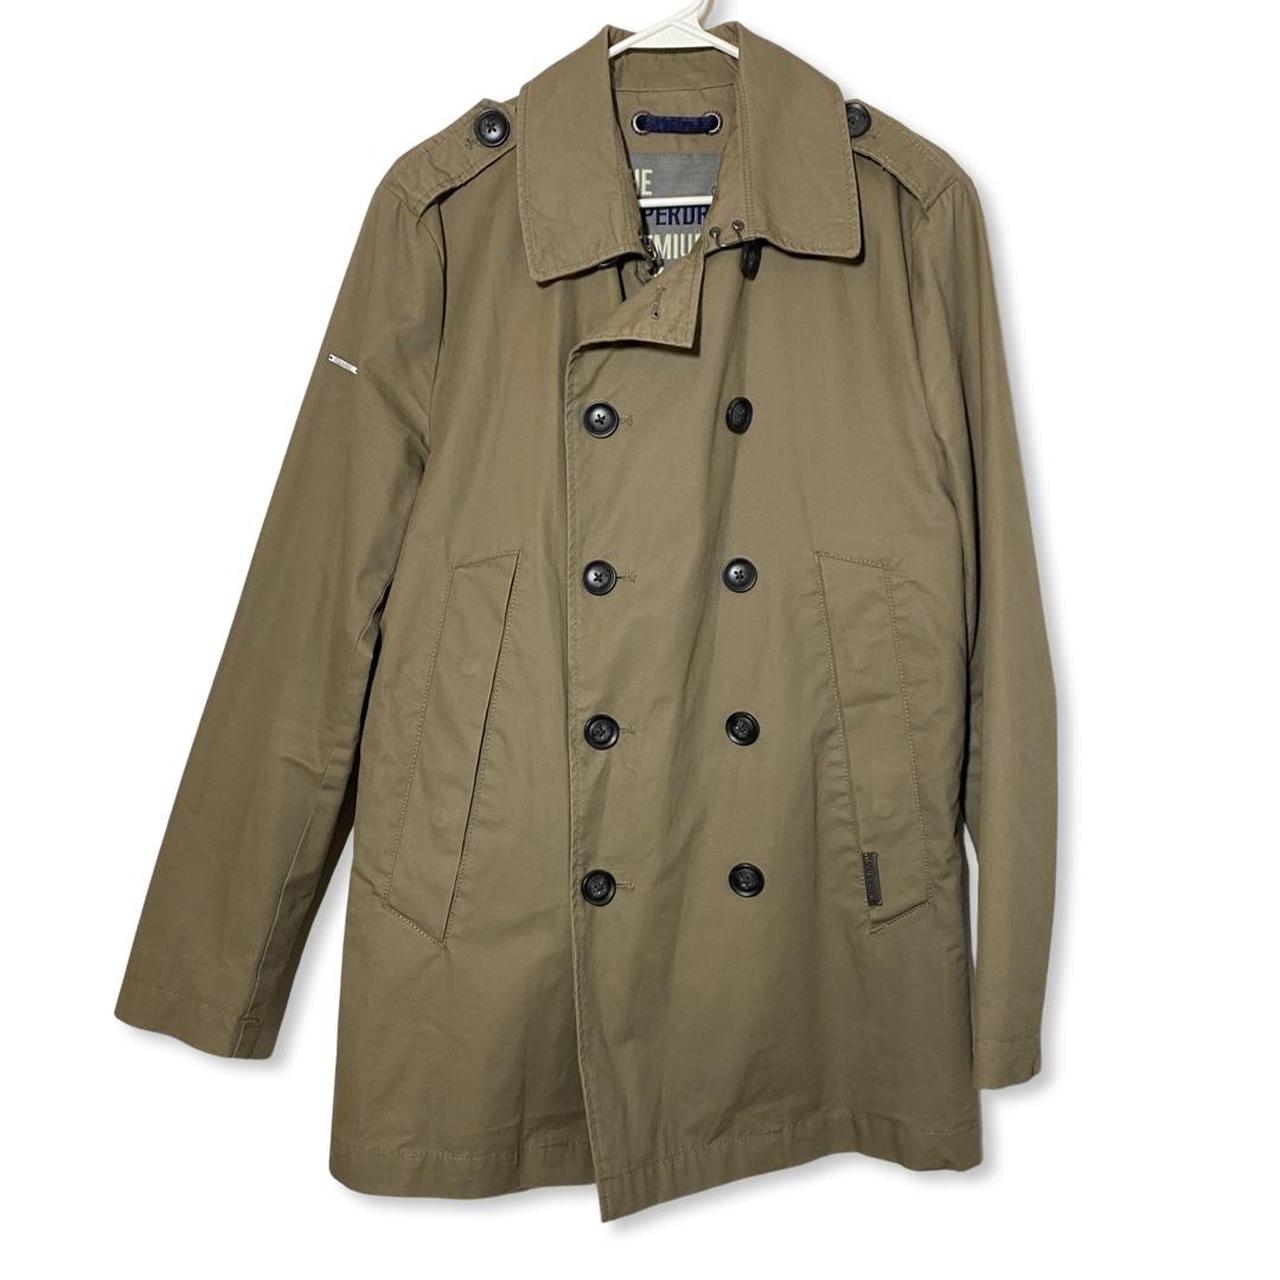 Superdry Premium Jacket Co No 3 Trench Coat Tan... - Depop